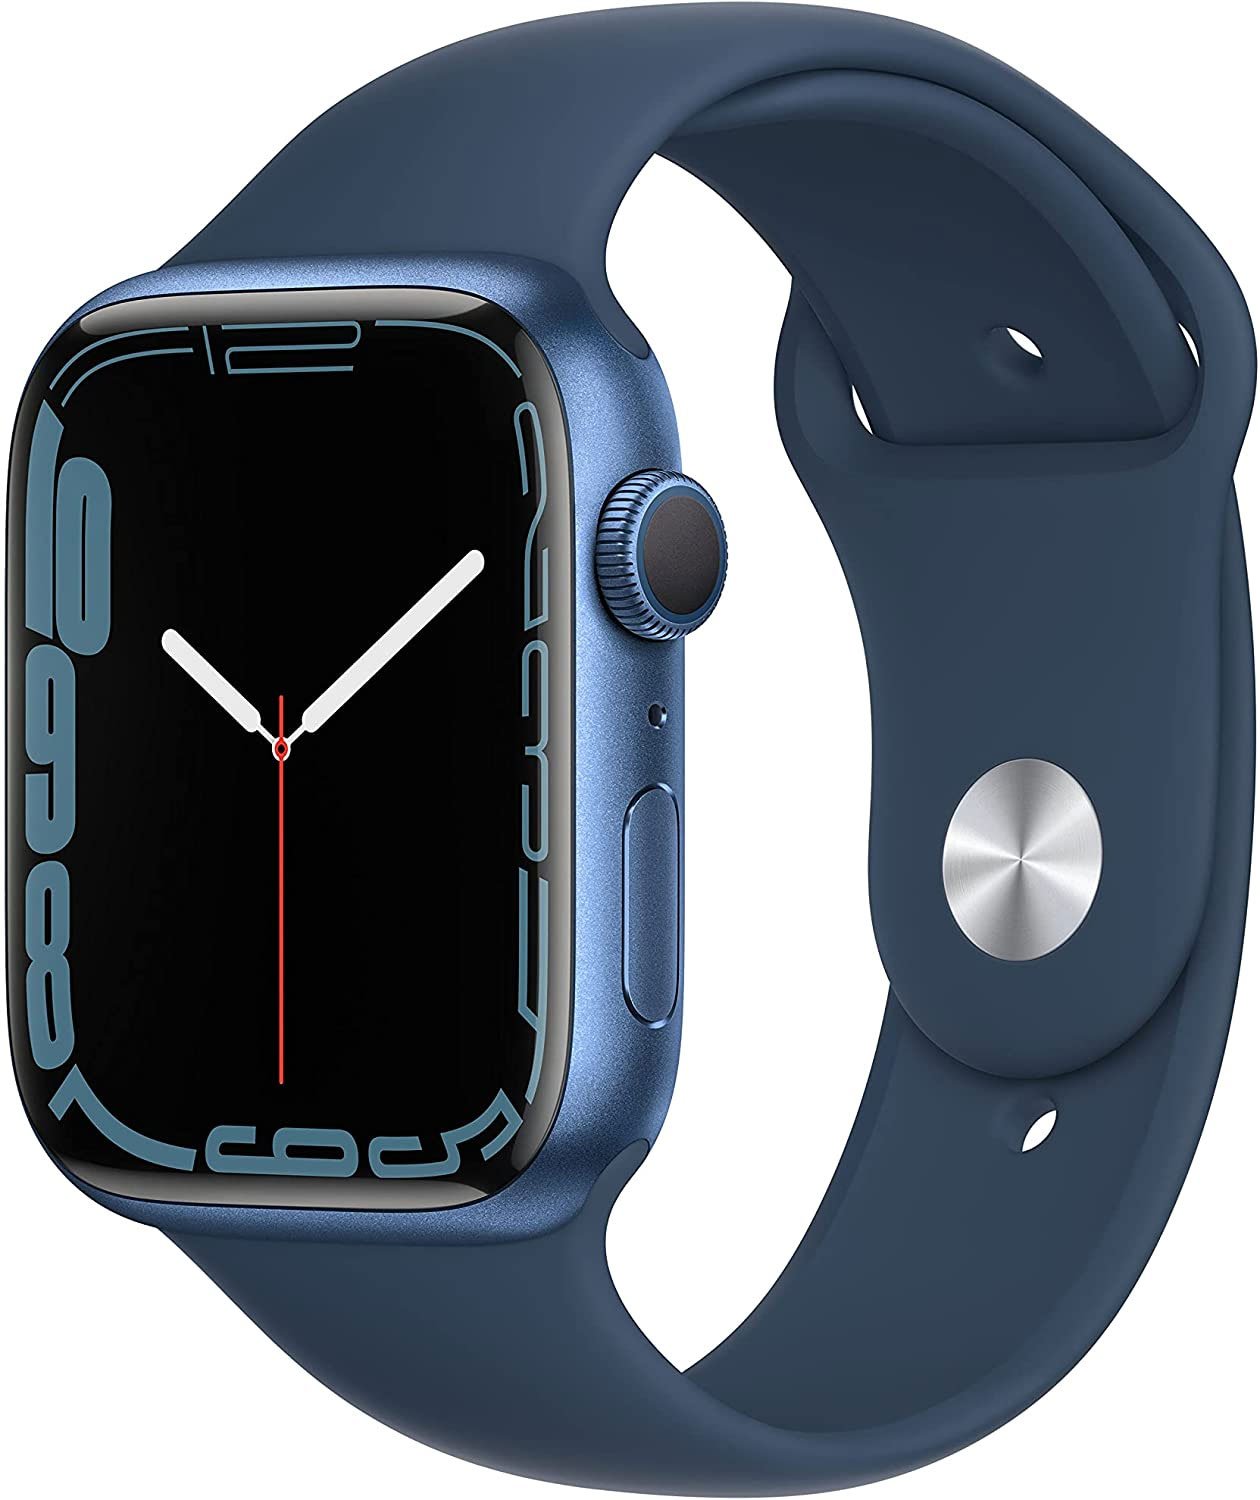 apple watch serías 7 gps